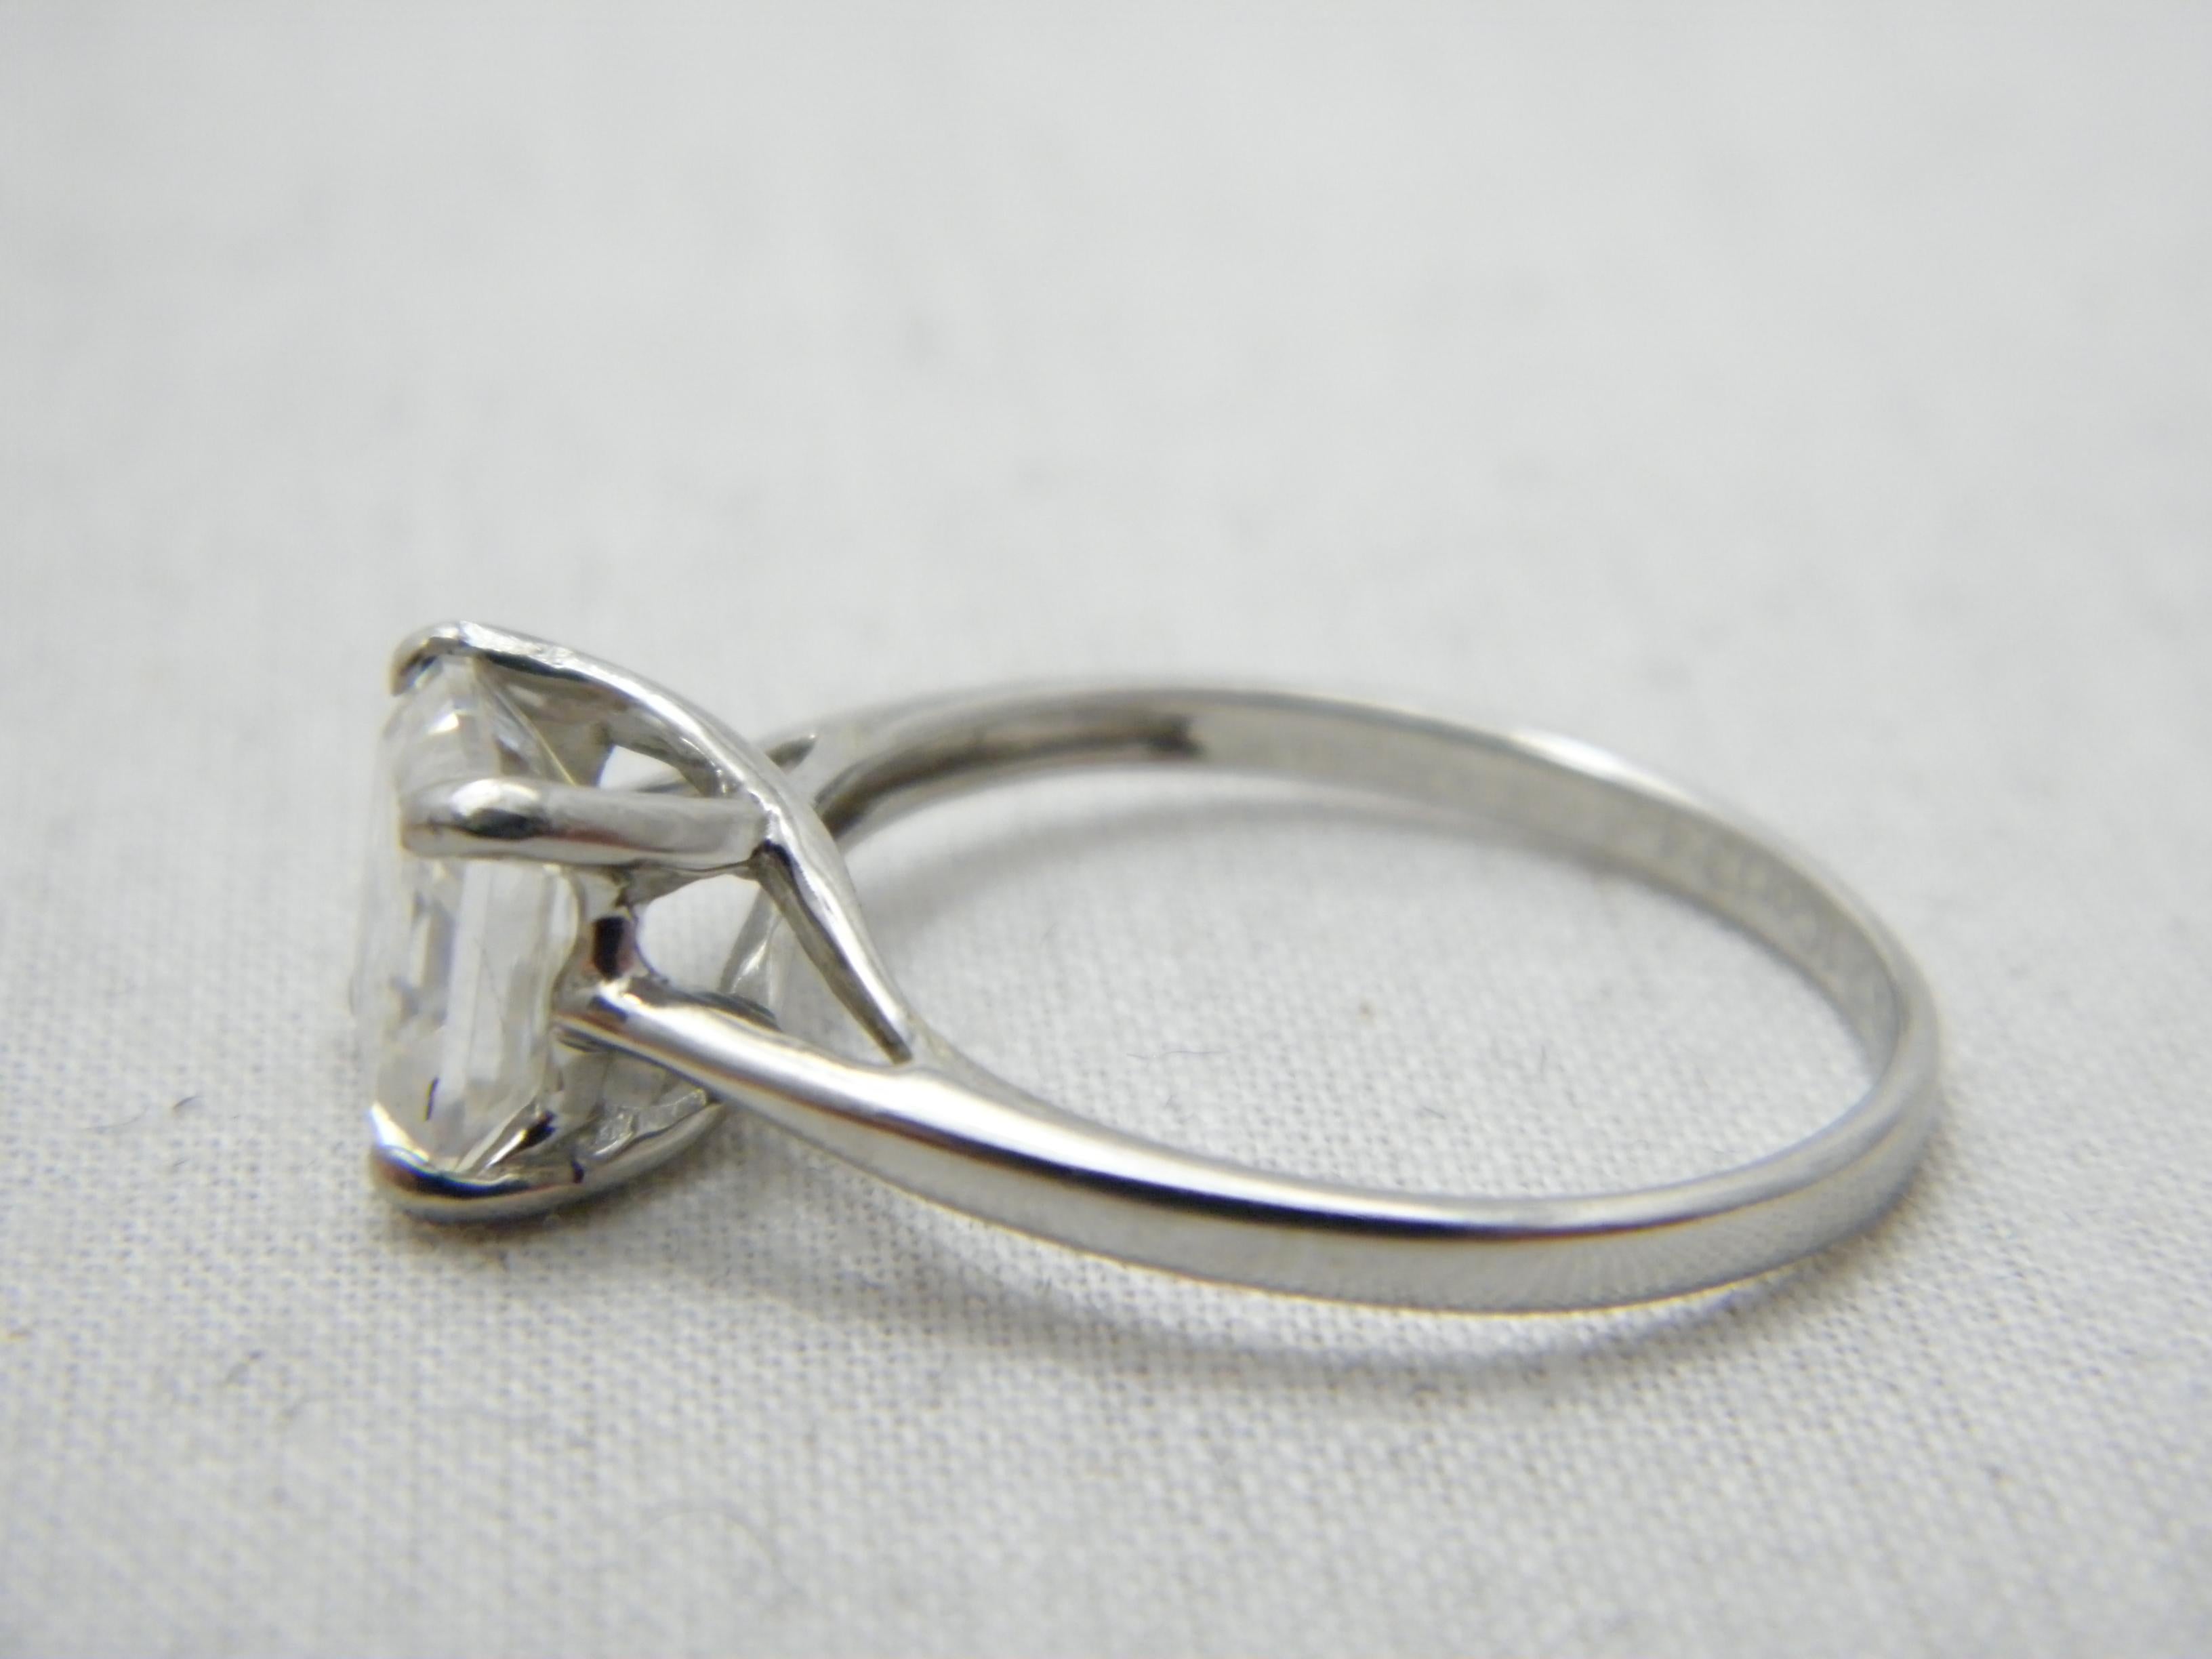 Women's Vintage 14ct White Gold 2.75 Cttw Diamond Solitaire Engagement Ring Size Q 8.25 For Sale